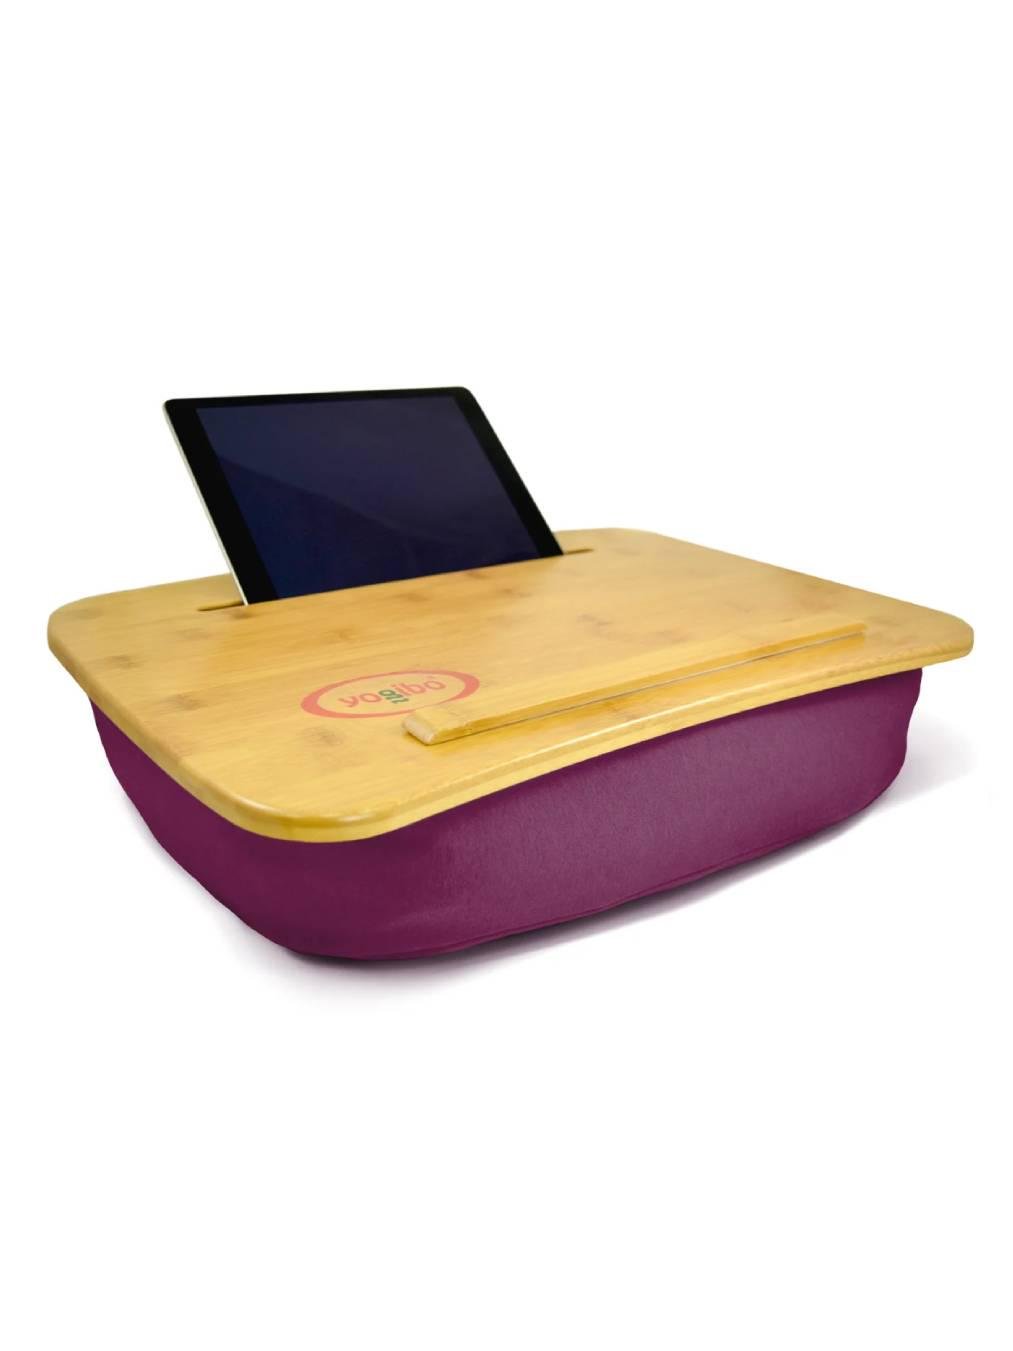 Yogibo Traybo 2.0 Portable Pillow Tray for Laptops and